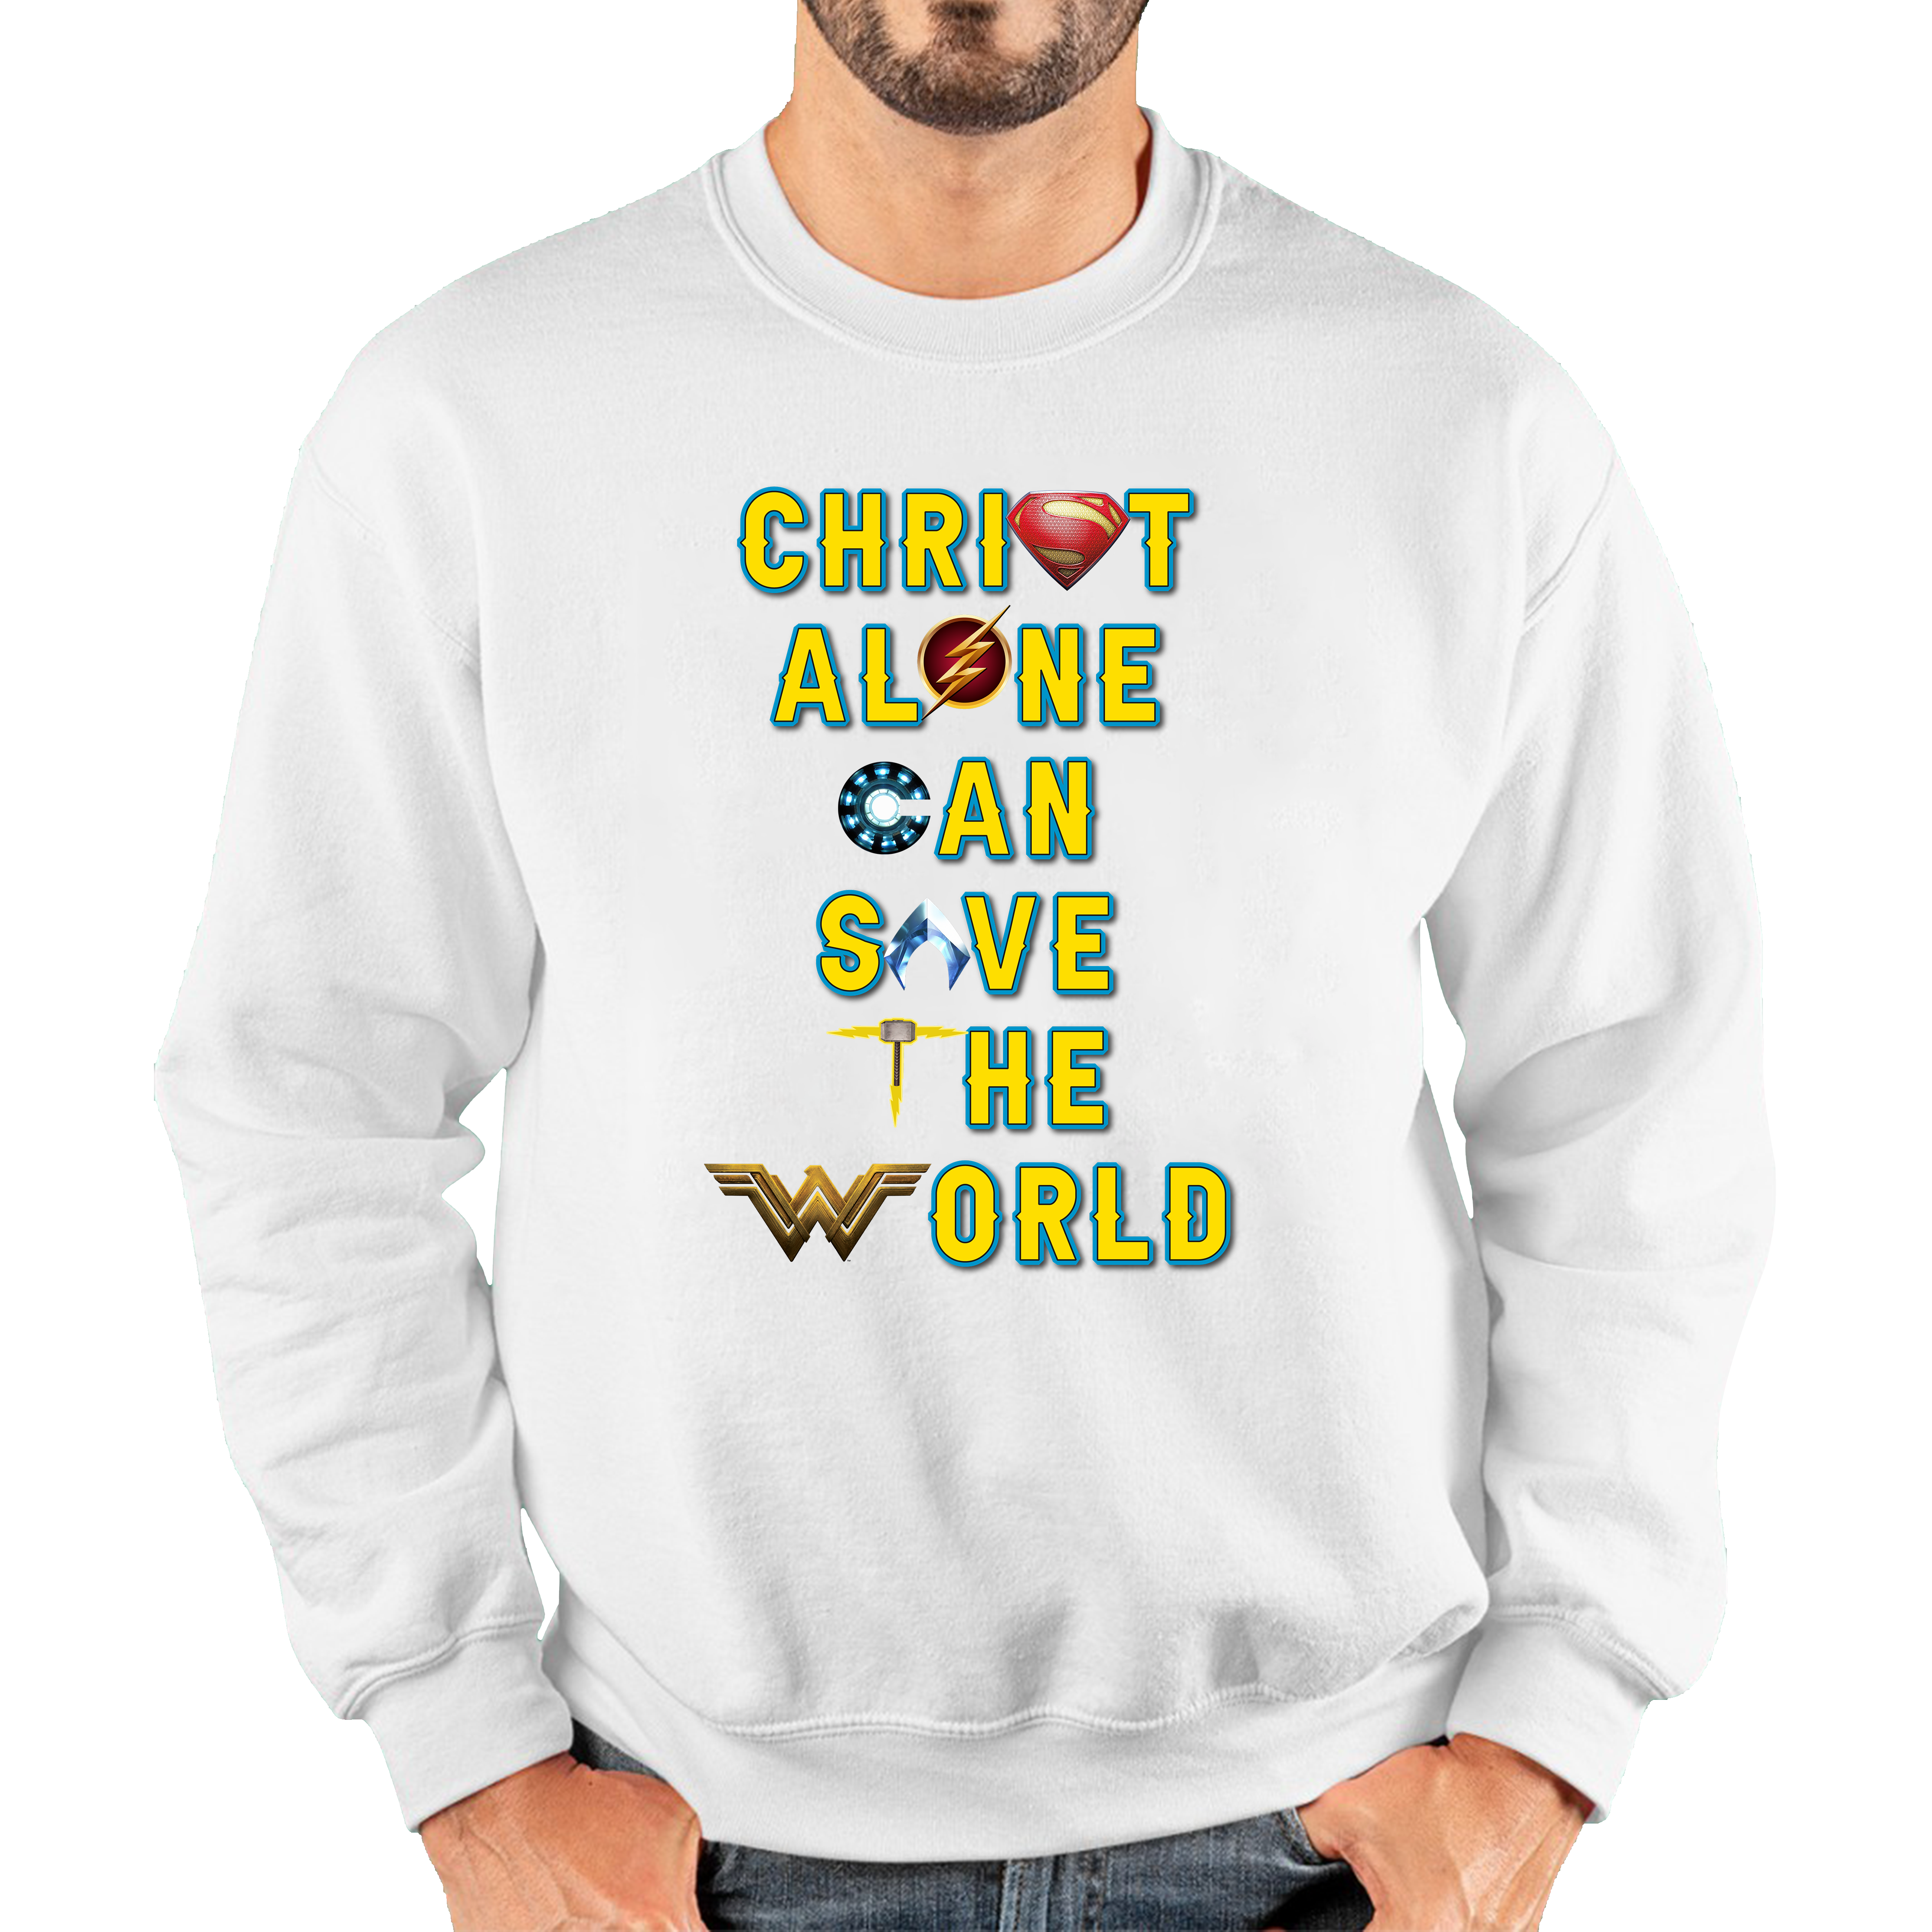 Christ Alone Can Save The World Jumper Avengers Superheroes Marvel Gift Unisex Sweatshirt